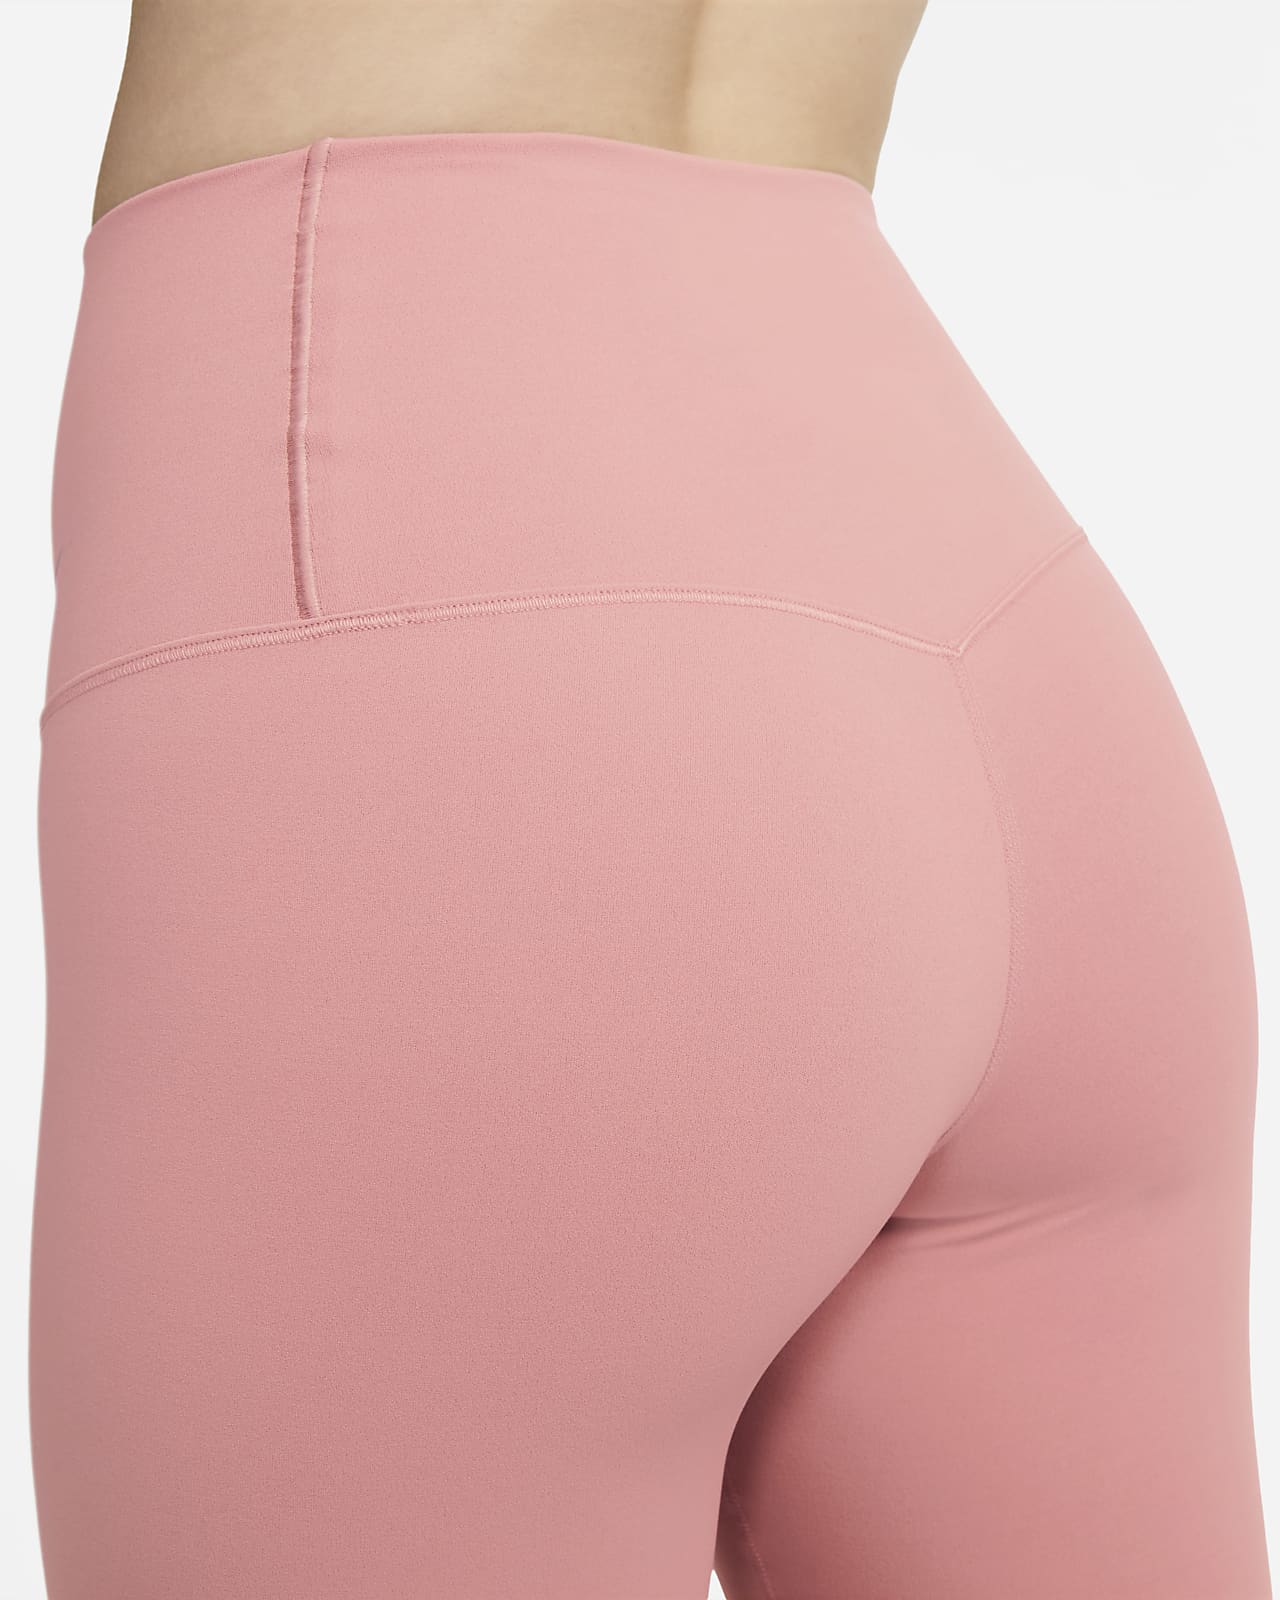 Womens compression 7/8 leggings Nike AIR 7/8 TGHT HR PR W pink